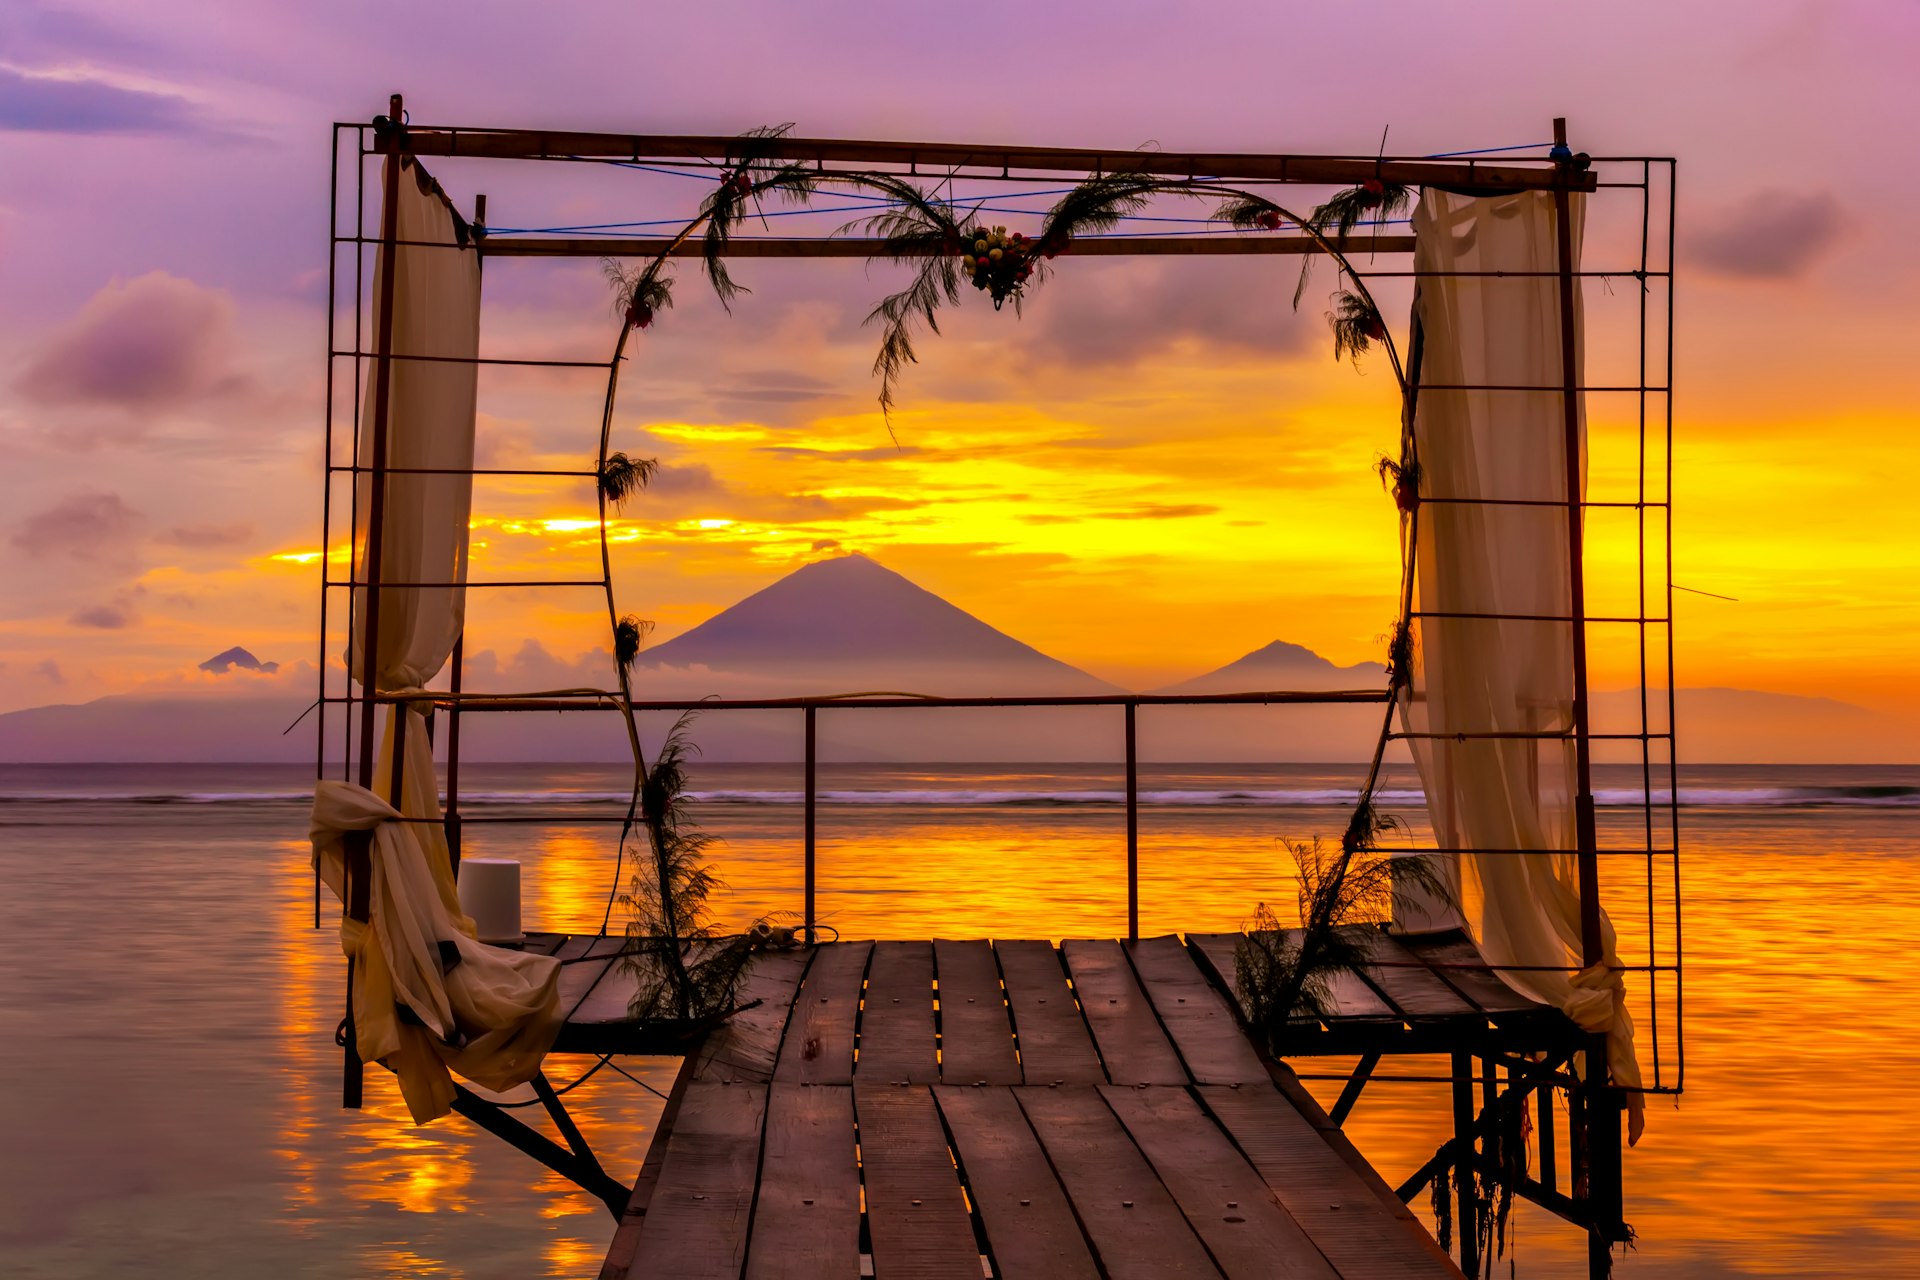 Canopy for romantic photo shoots, Gili Trawangan, Indonesia.